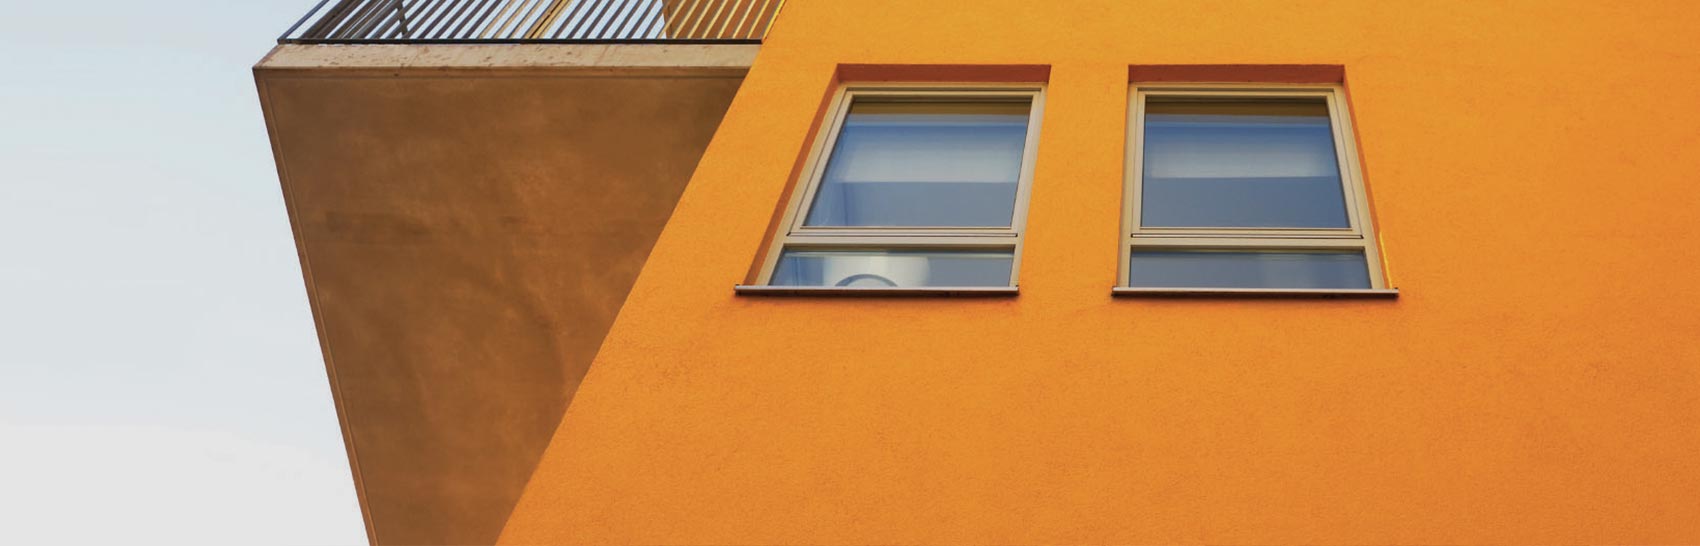 Aluminium tilt and turn window on orange wall bristol